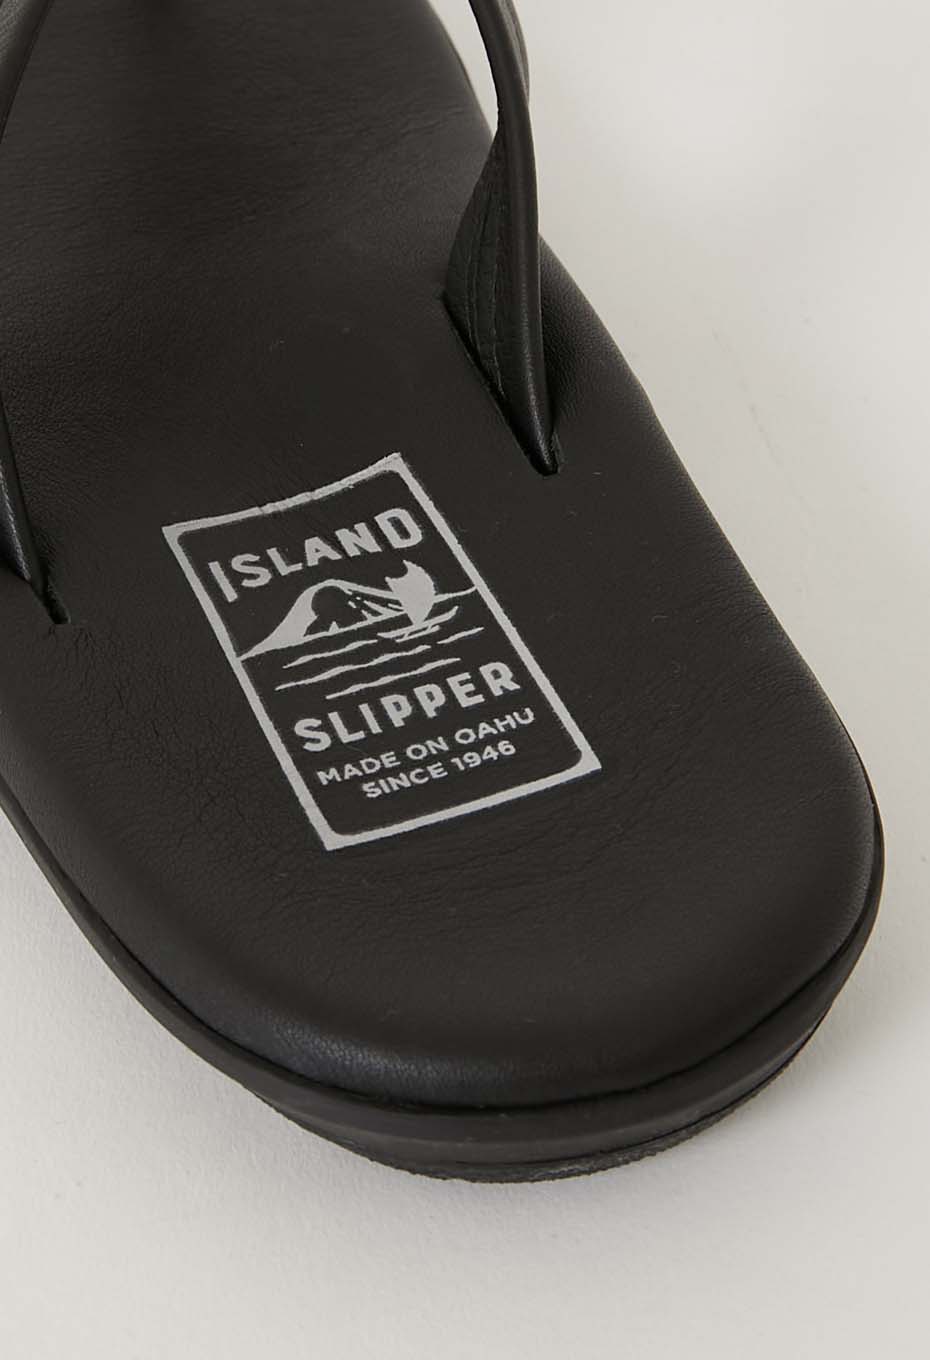 ISLAND SLIPPER レザーサンダル 28.0 黒